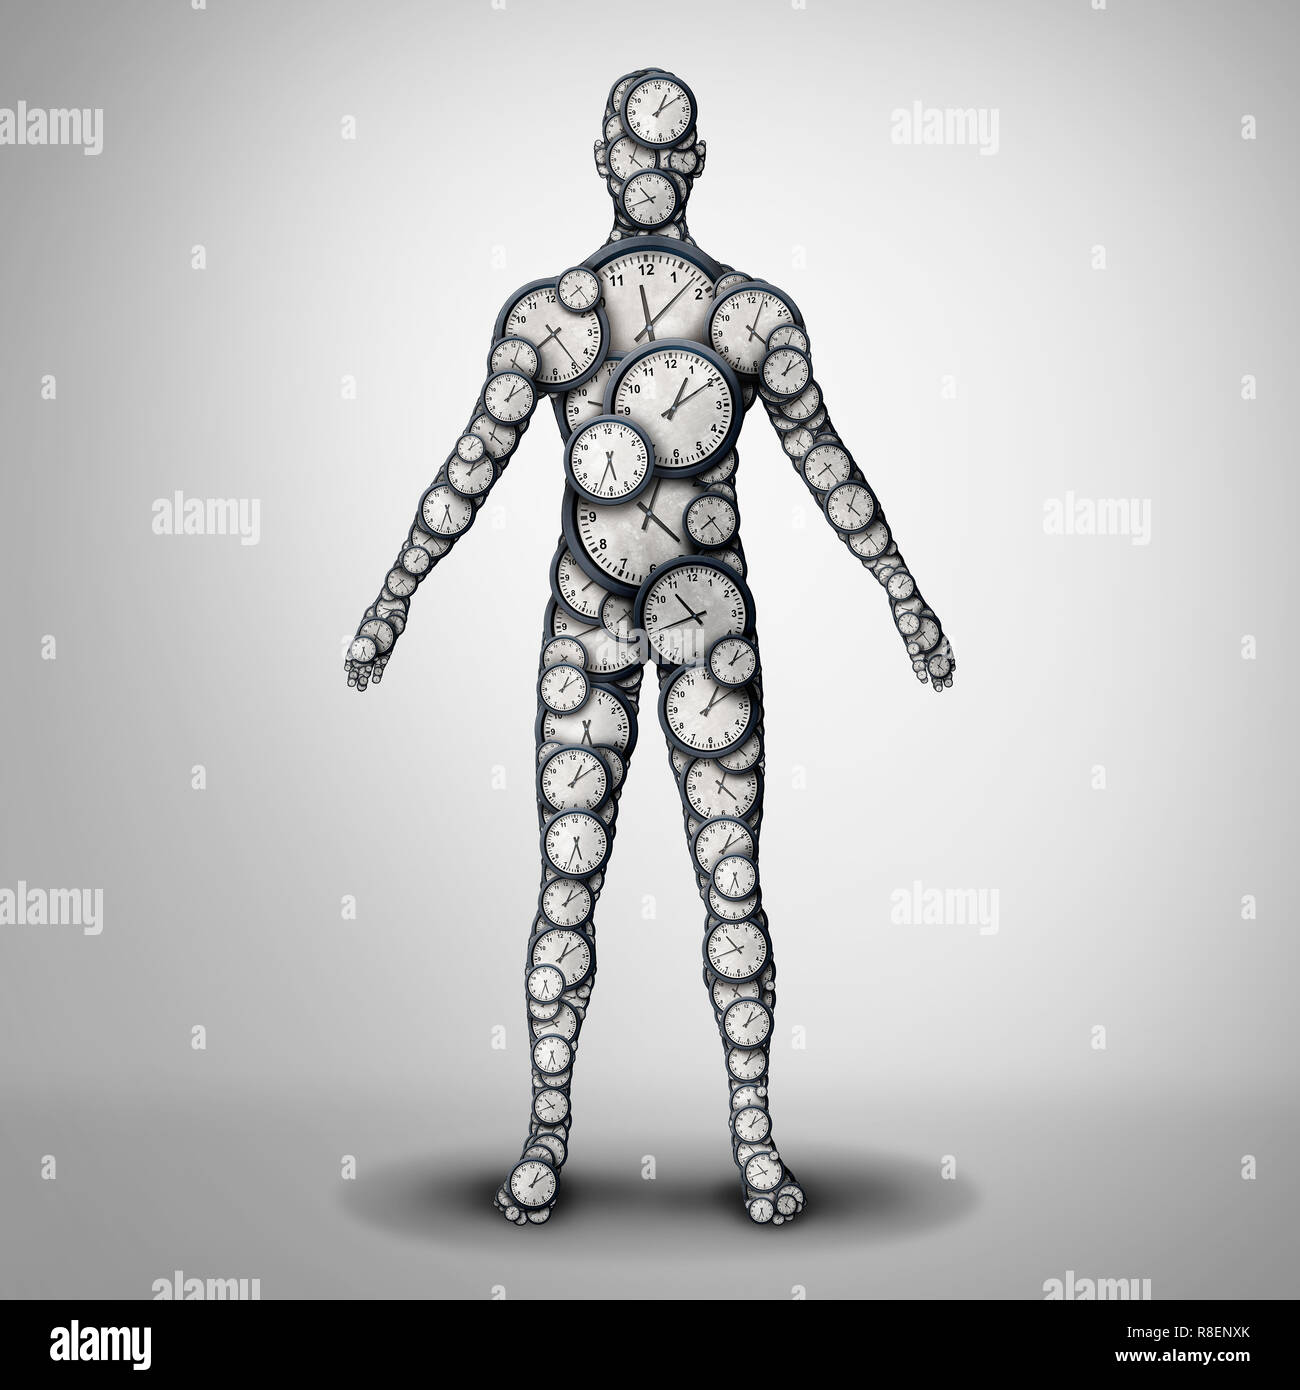 Body clock health and circadian rhythm or sleep disorder and life longevity or lifespan medicine concept as a 3D illustration. Stock Photo